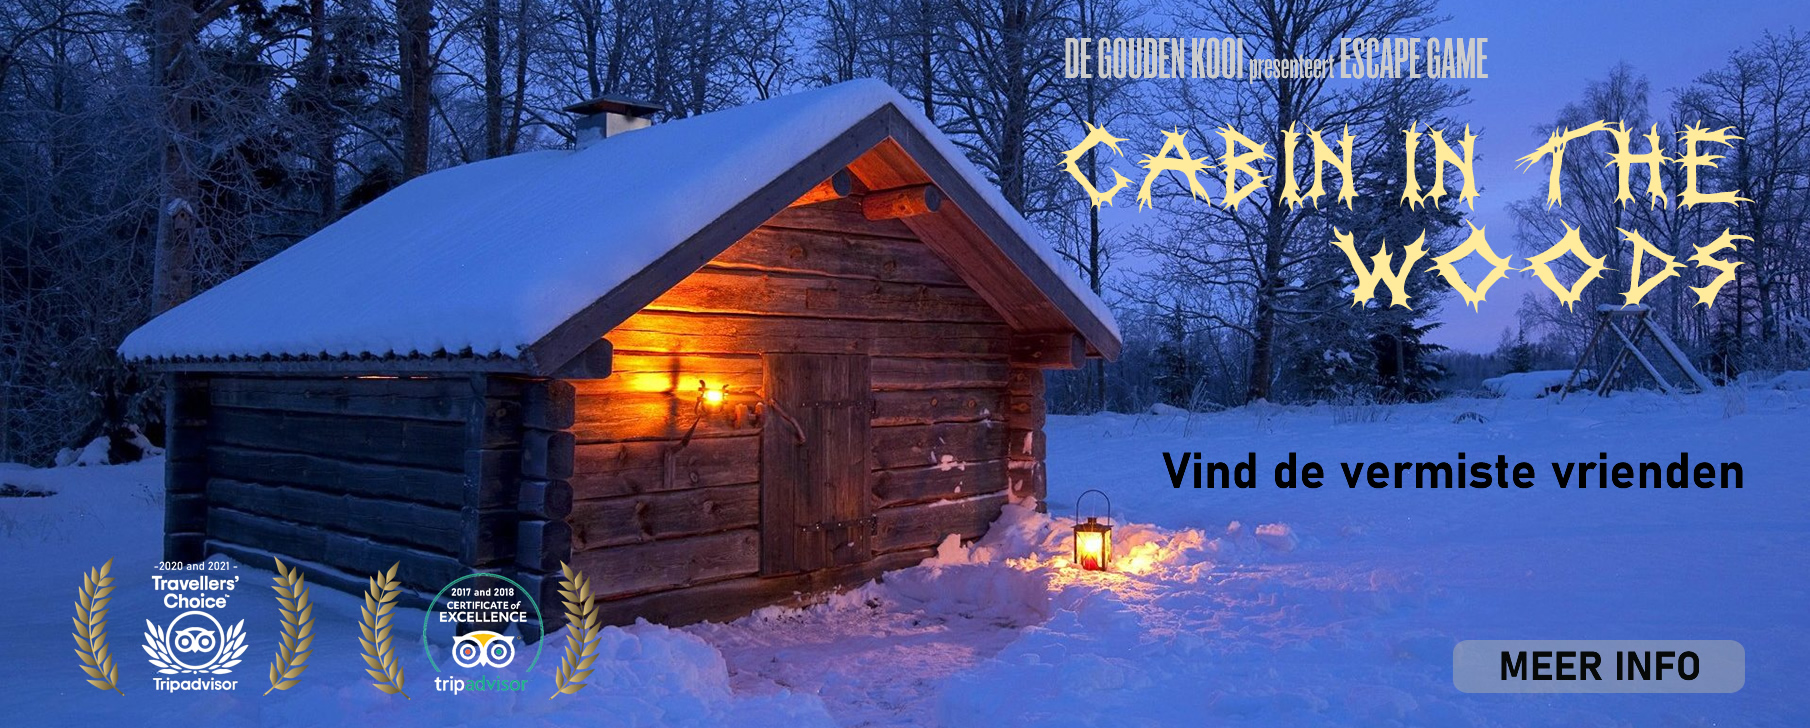 Escape game De Gouden Kooi - Cabin in the woods